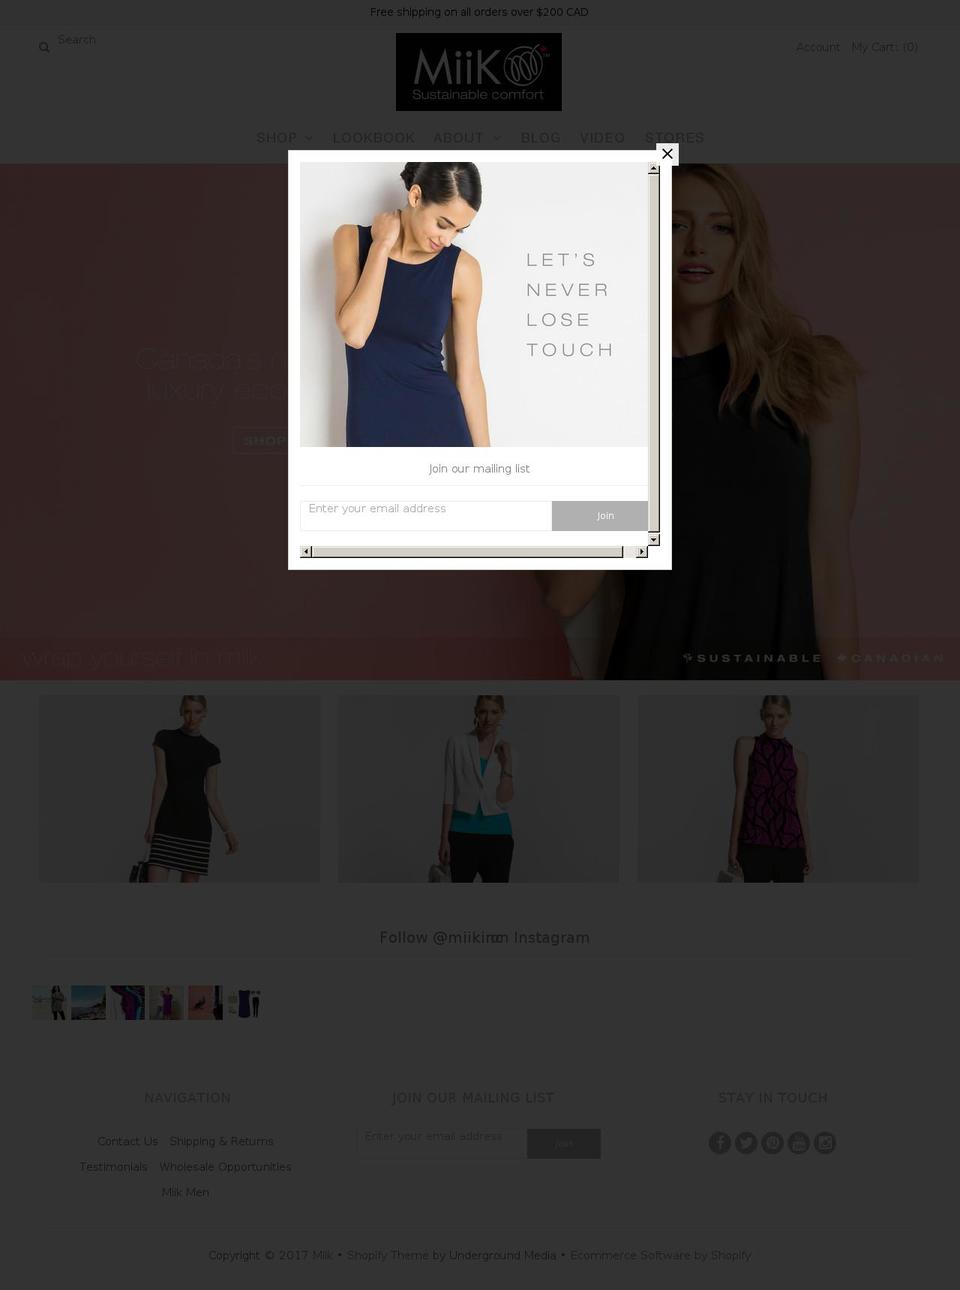 miik.ca shopify website screenshot